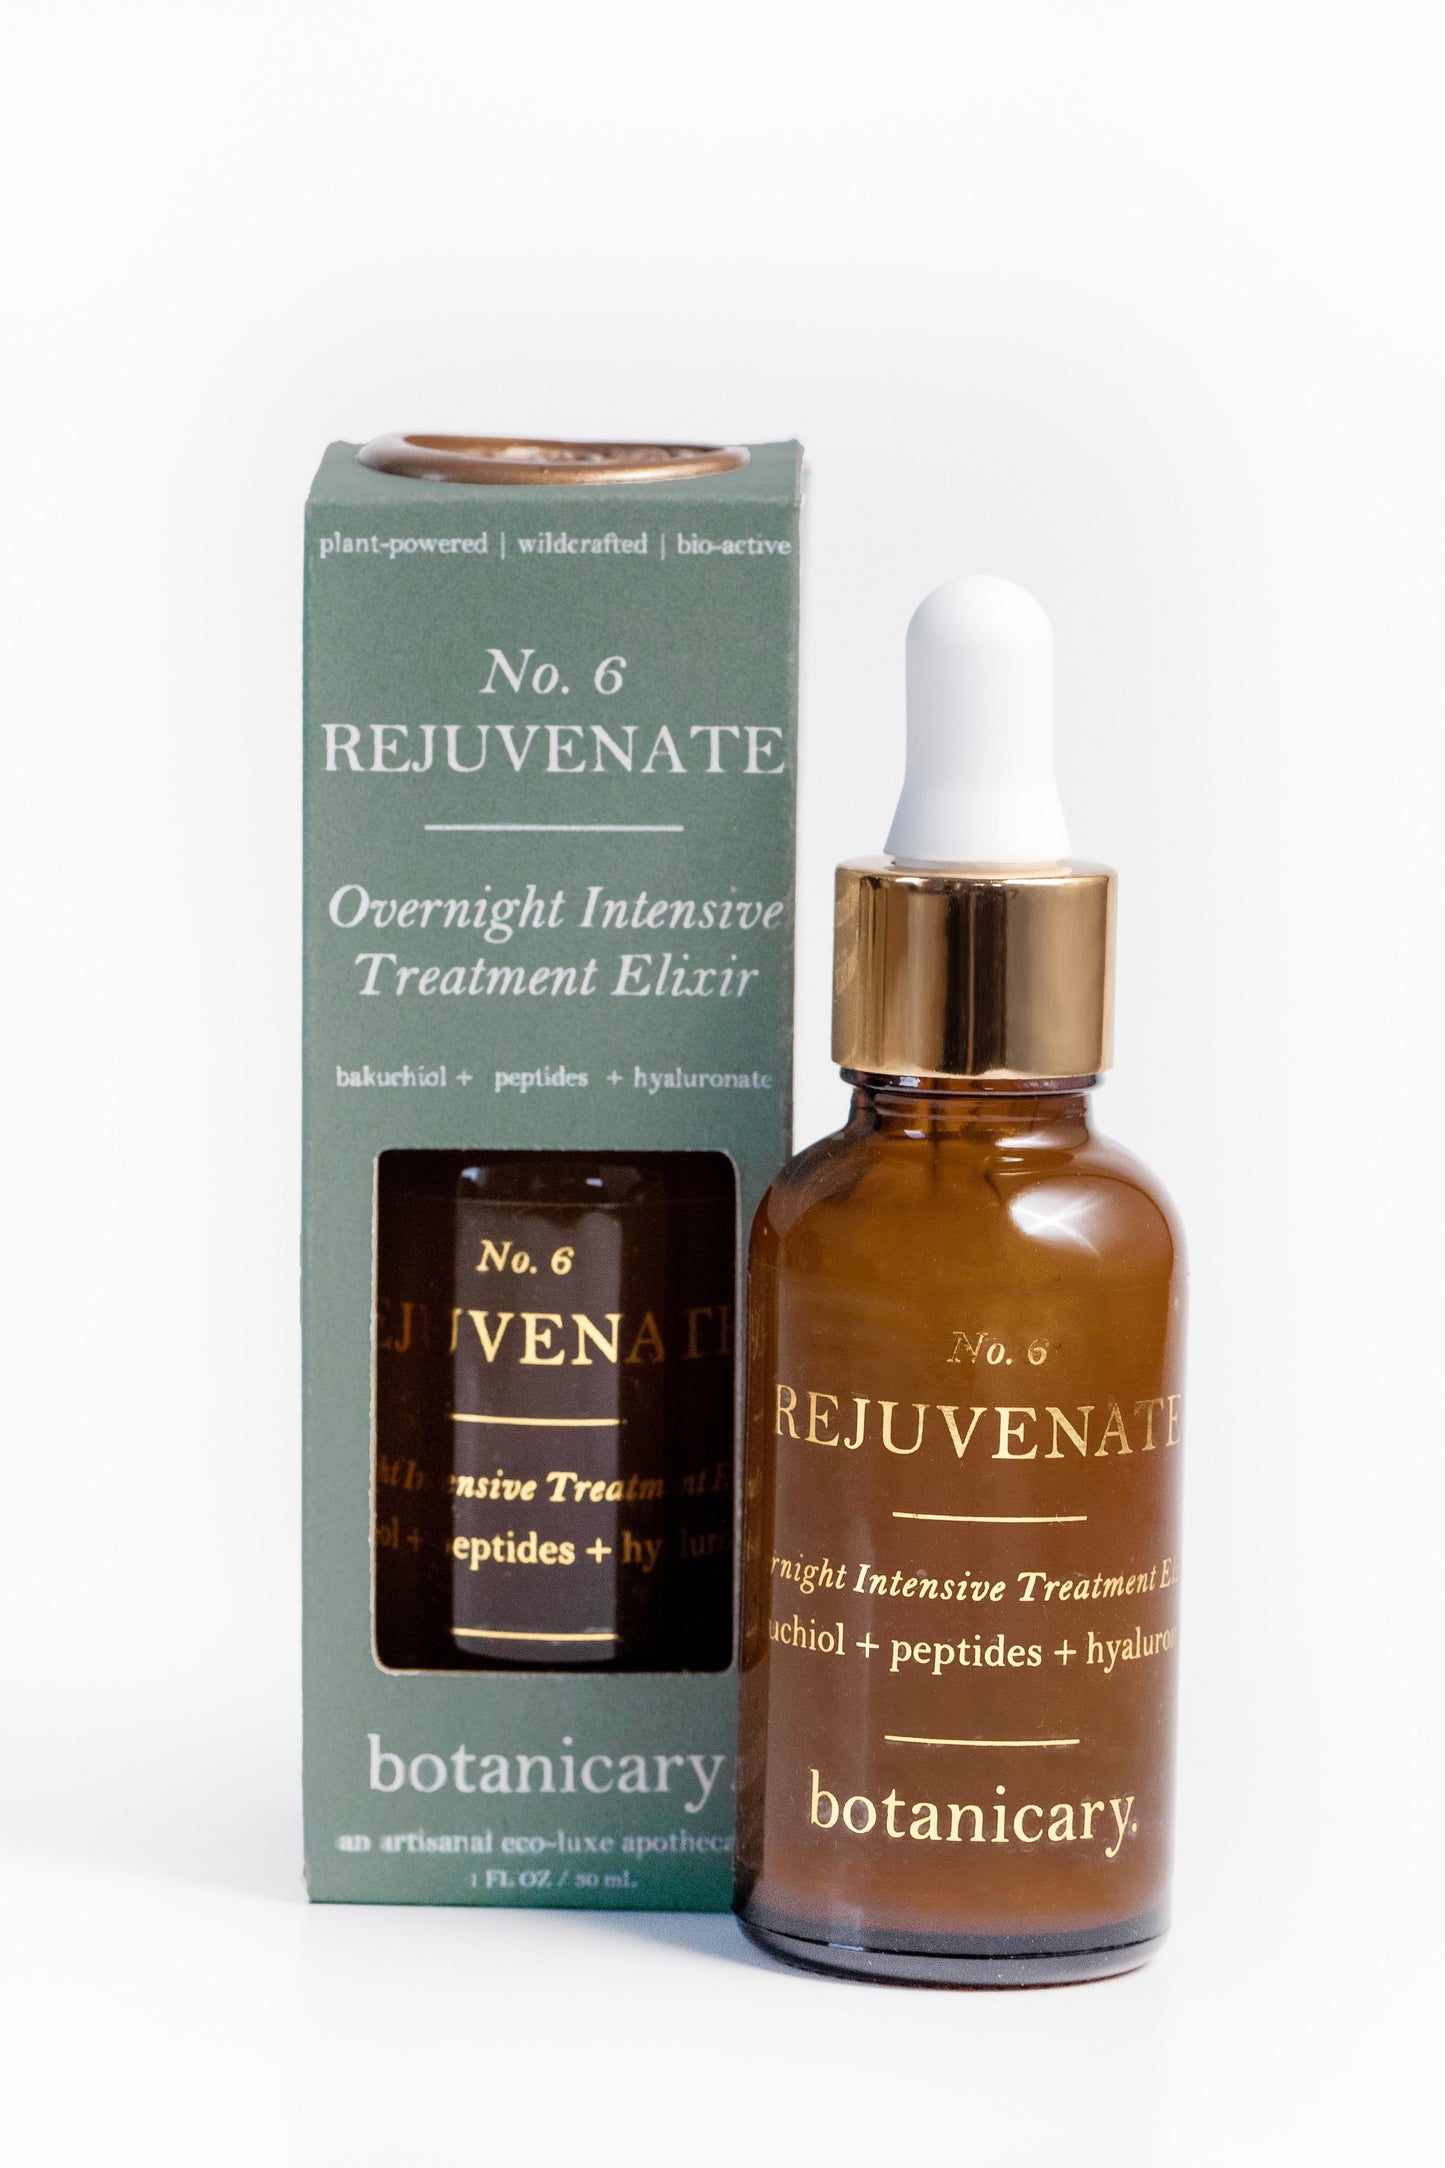 No. 6 REJUVENATE - Overnight Intensive Treatment Elixir